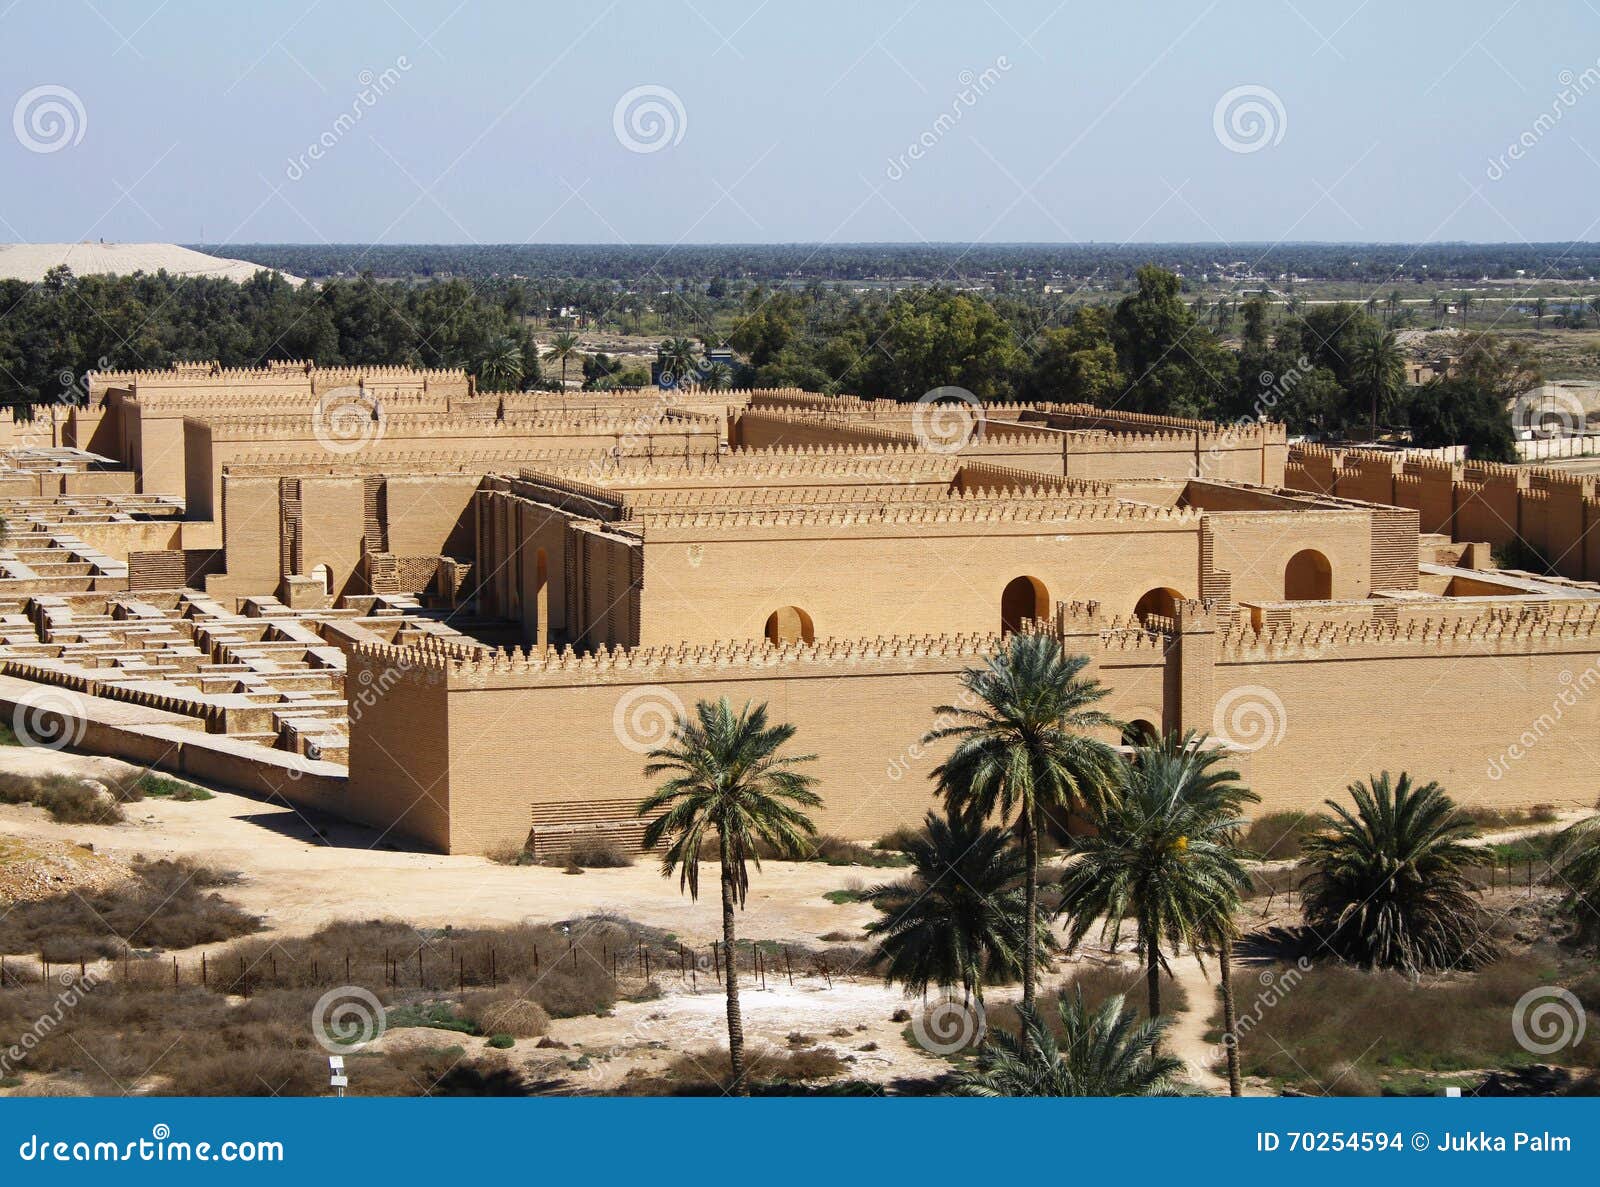 Ancient Babylon in Iraq